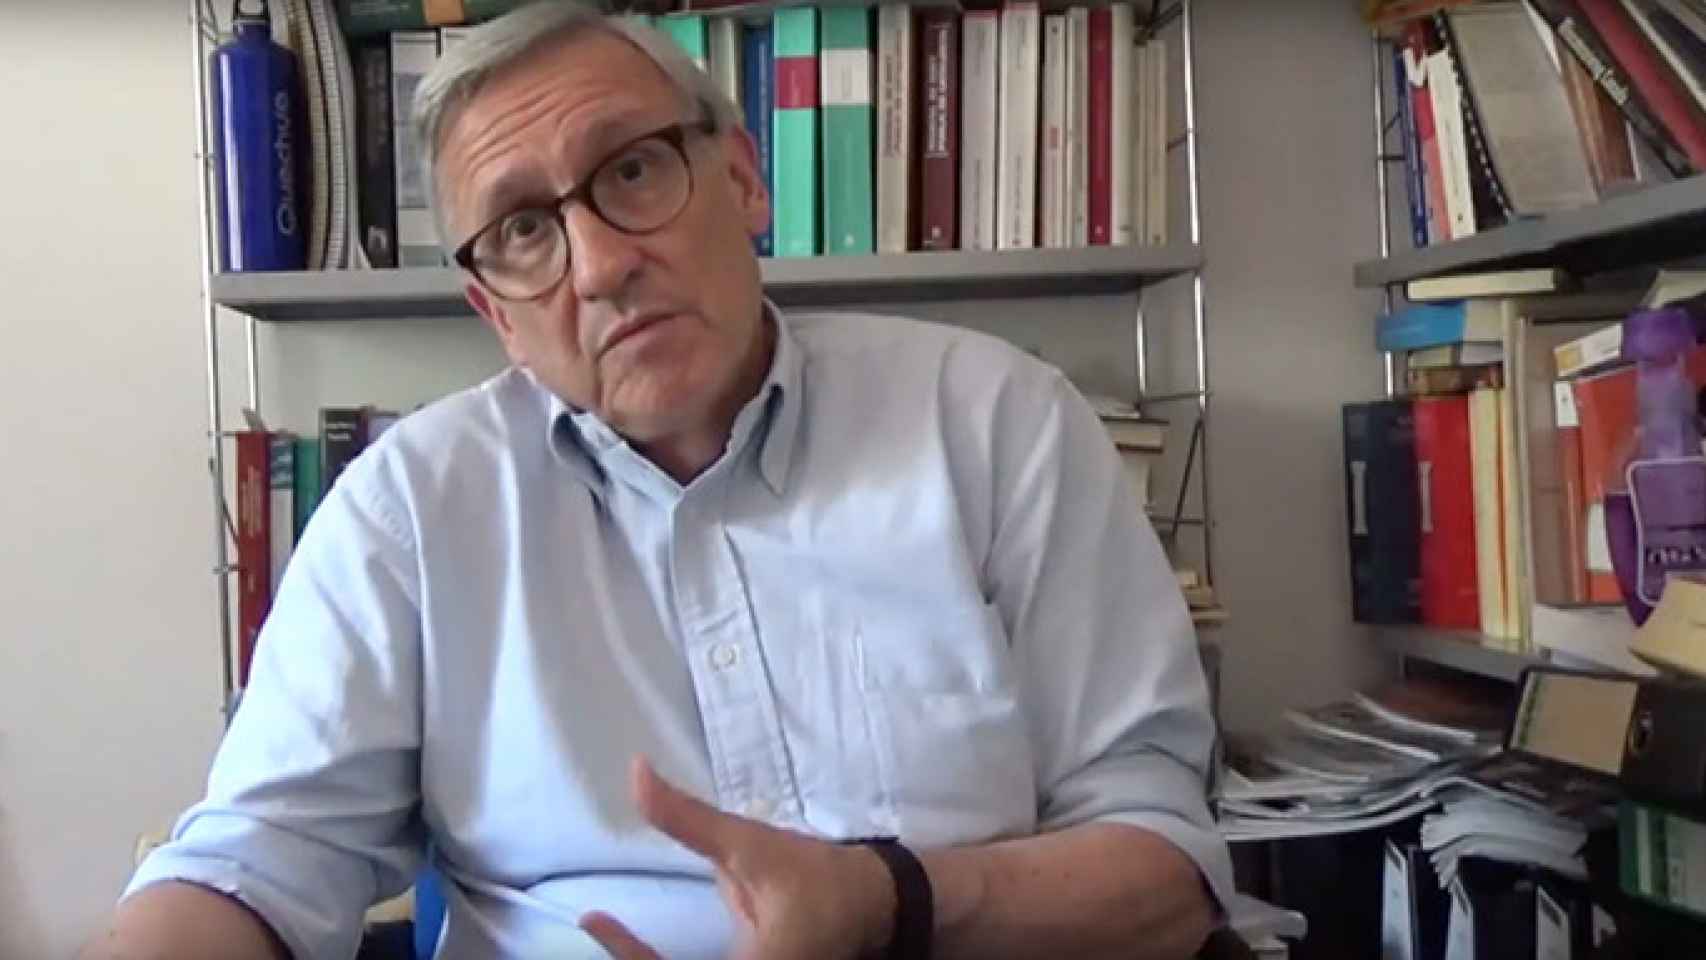 El catedrático de Derecho Constitucional de la Universitat de Barcelona, Xavier Arbós / FEDERALISTES D'ESQUERRES